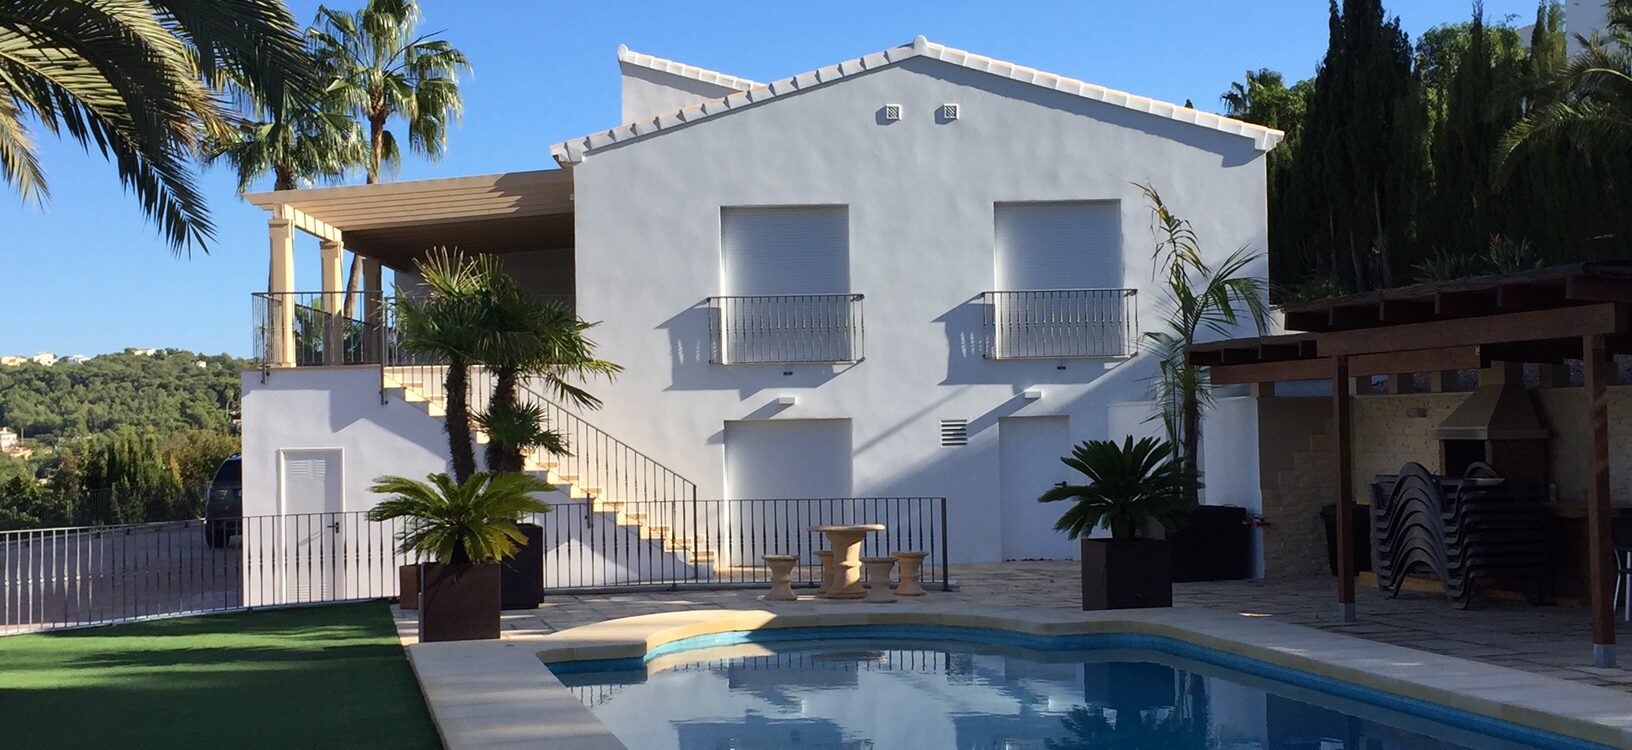 Verkauft – Moderne Villa mit Meeres-Panoramablick & separatem Gästeappartement